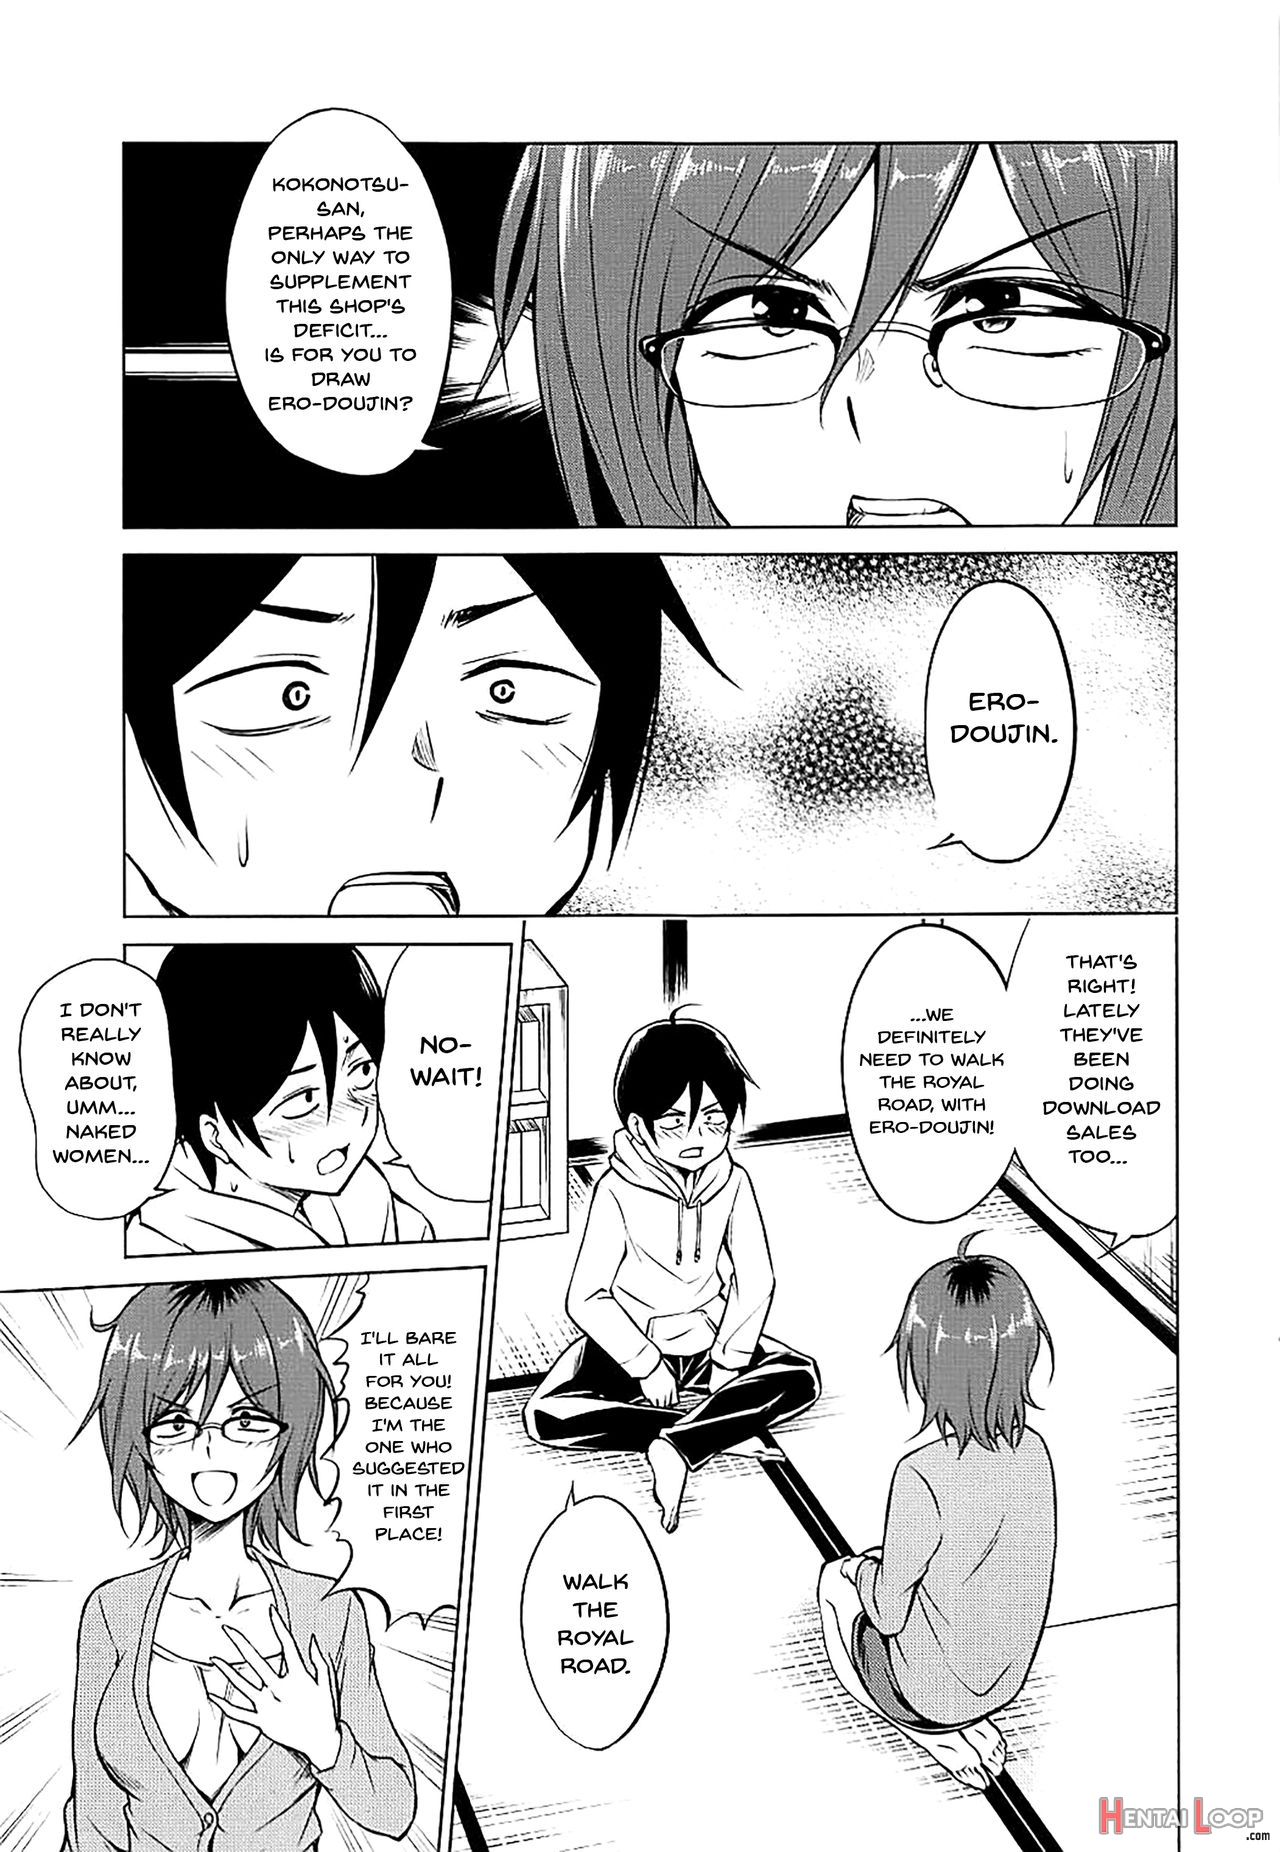 For Hajime's Ero Doujins page 2